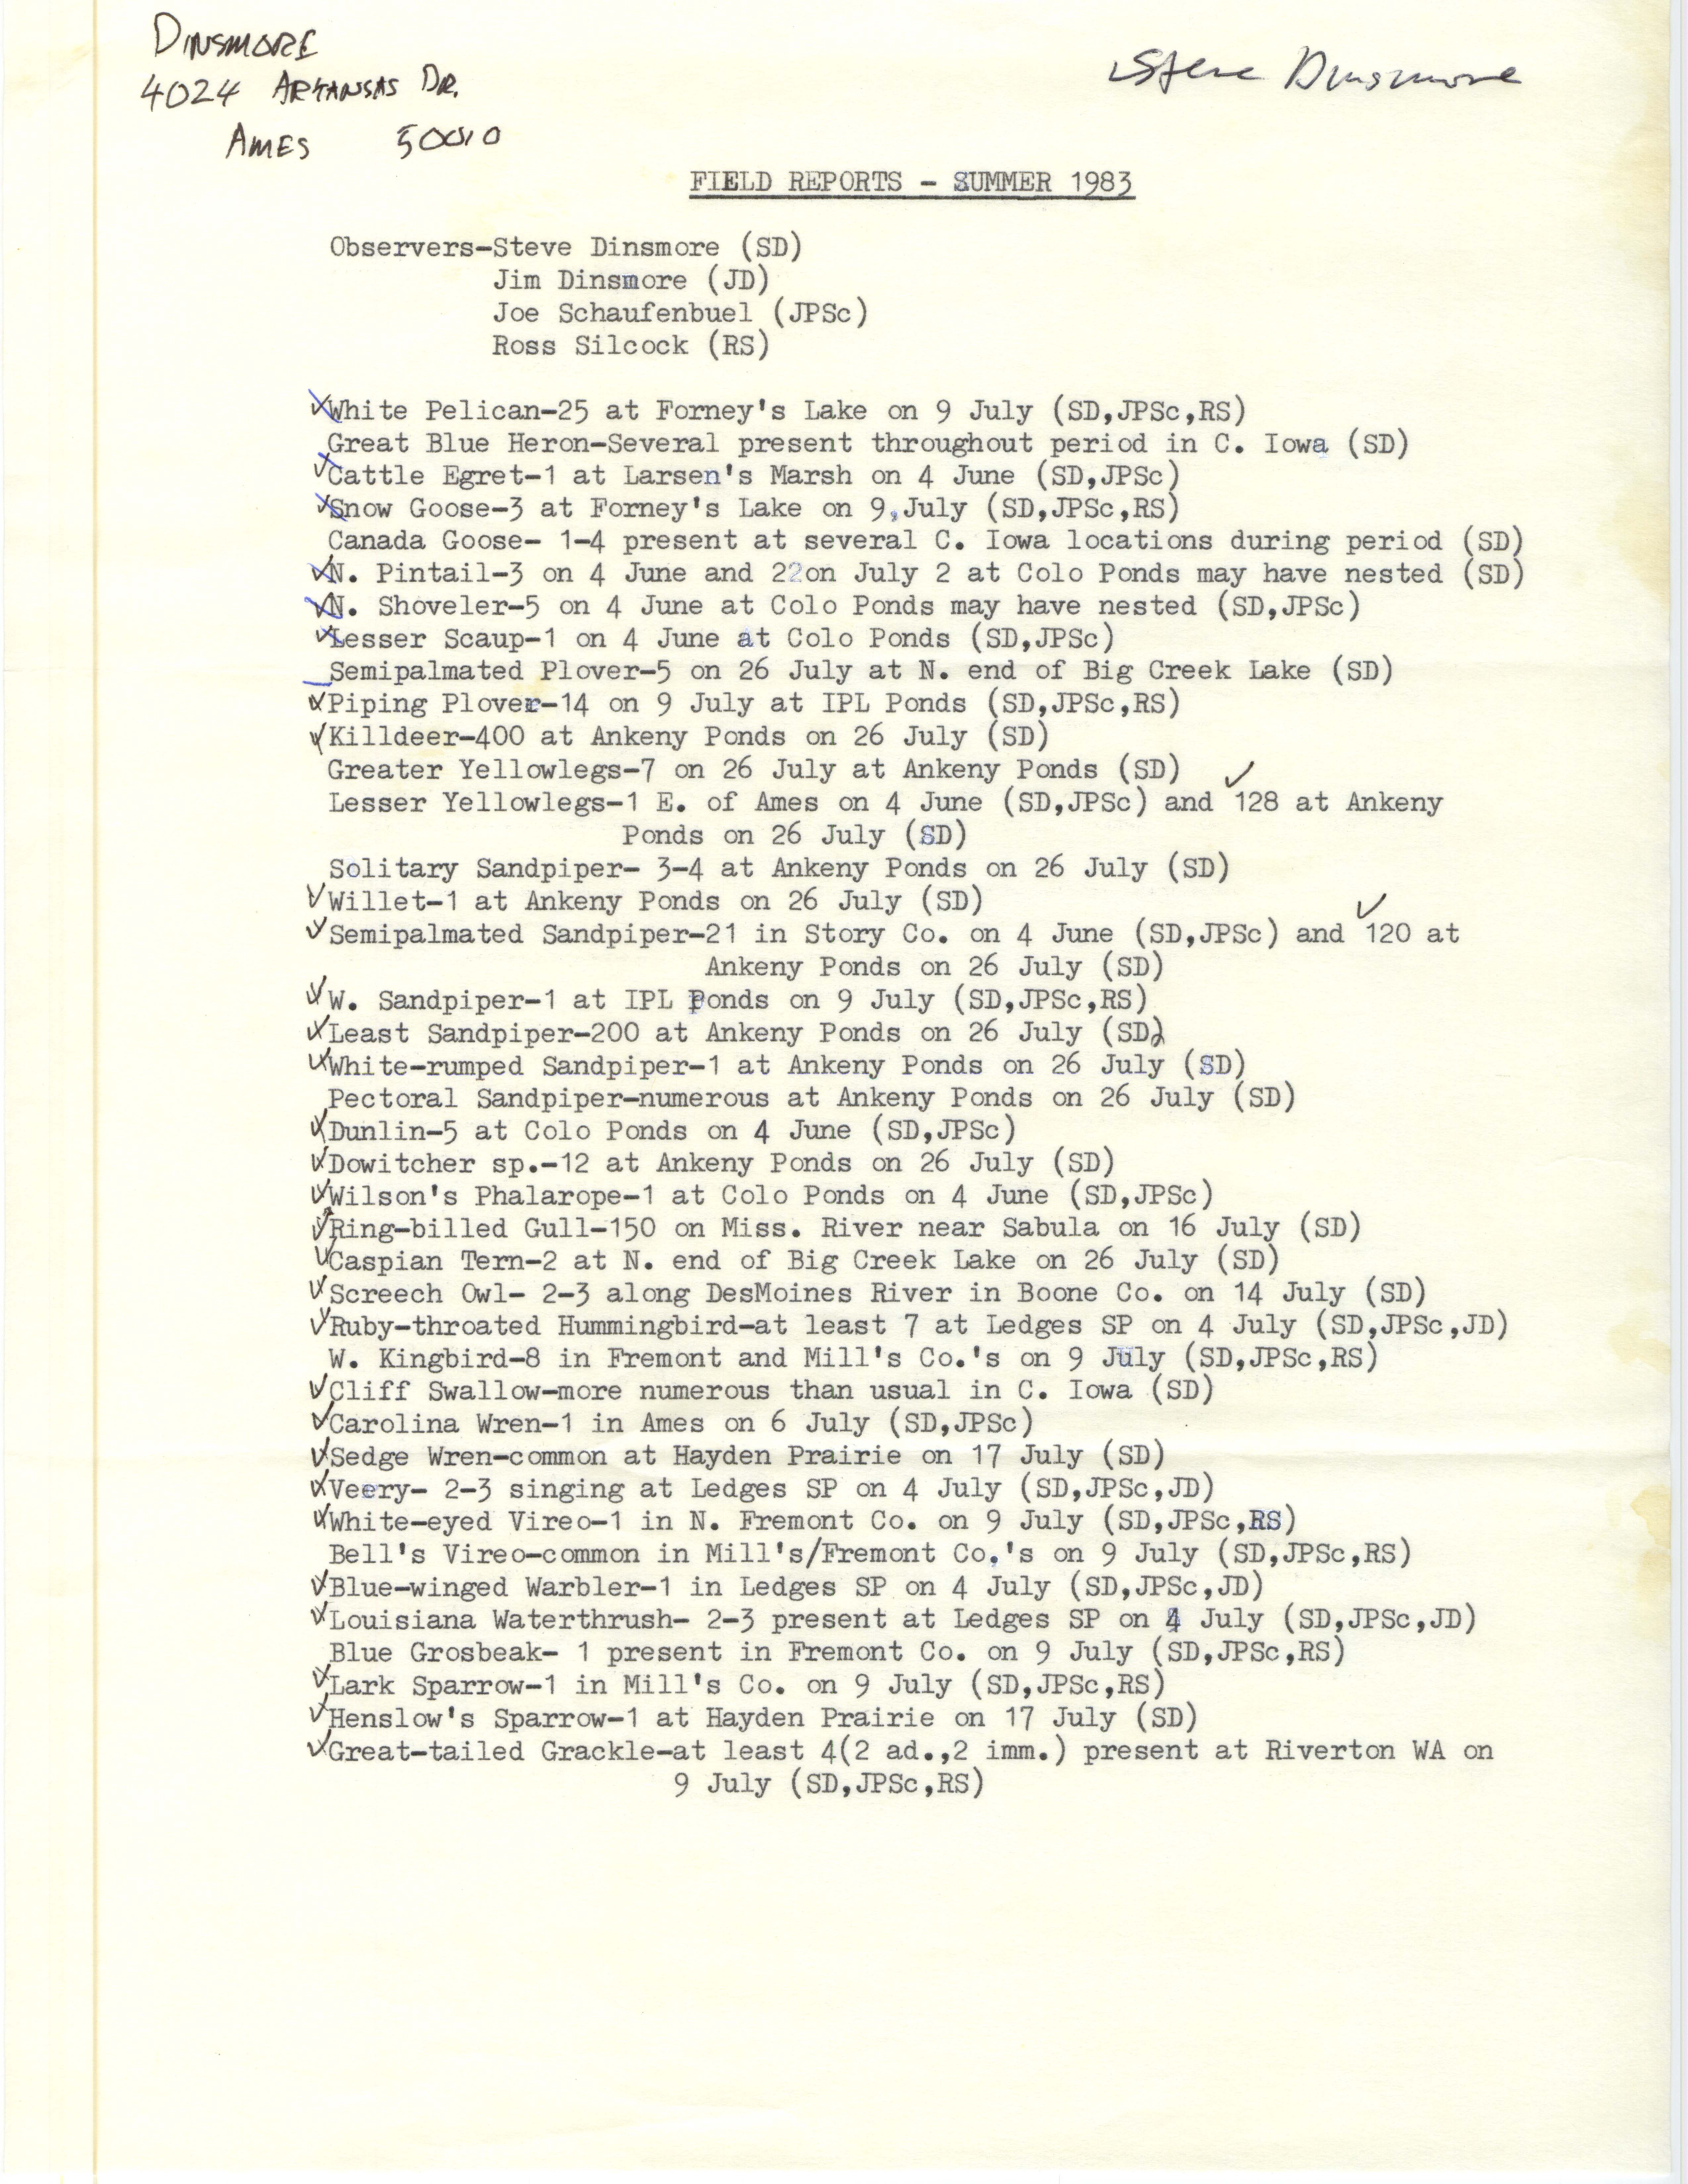 Field reports, Summer 1983